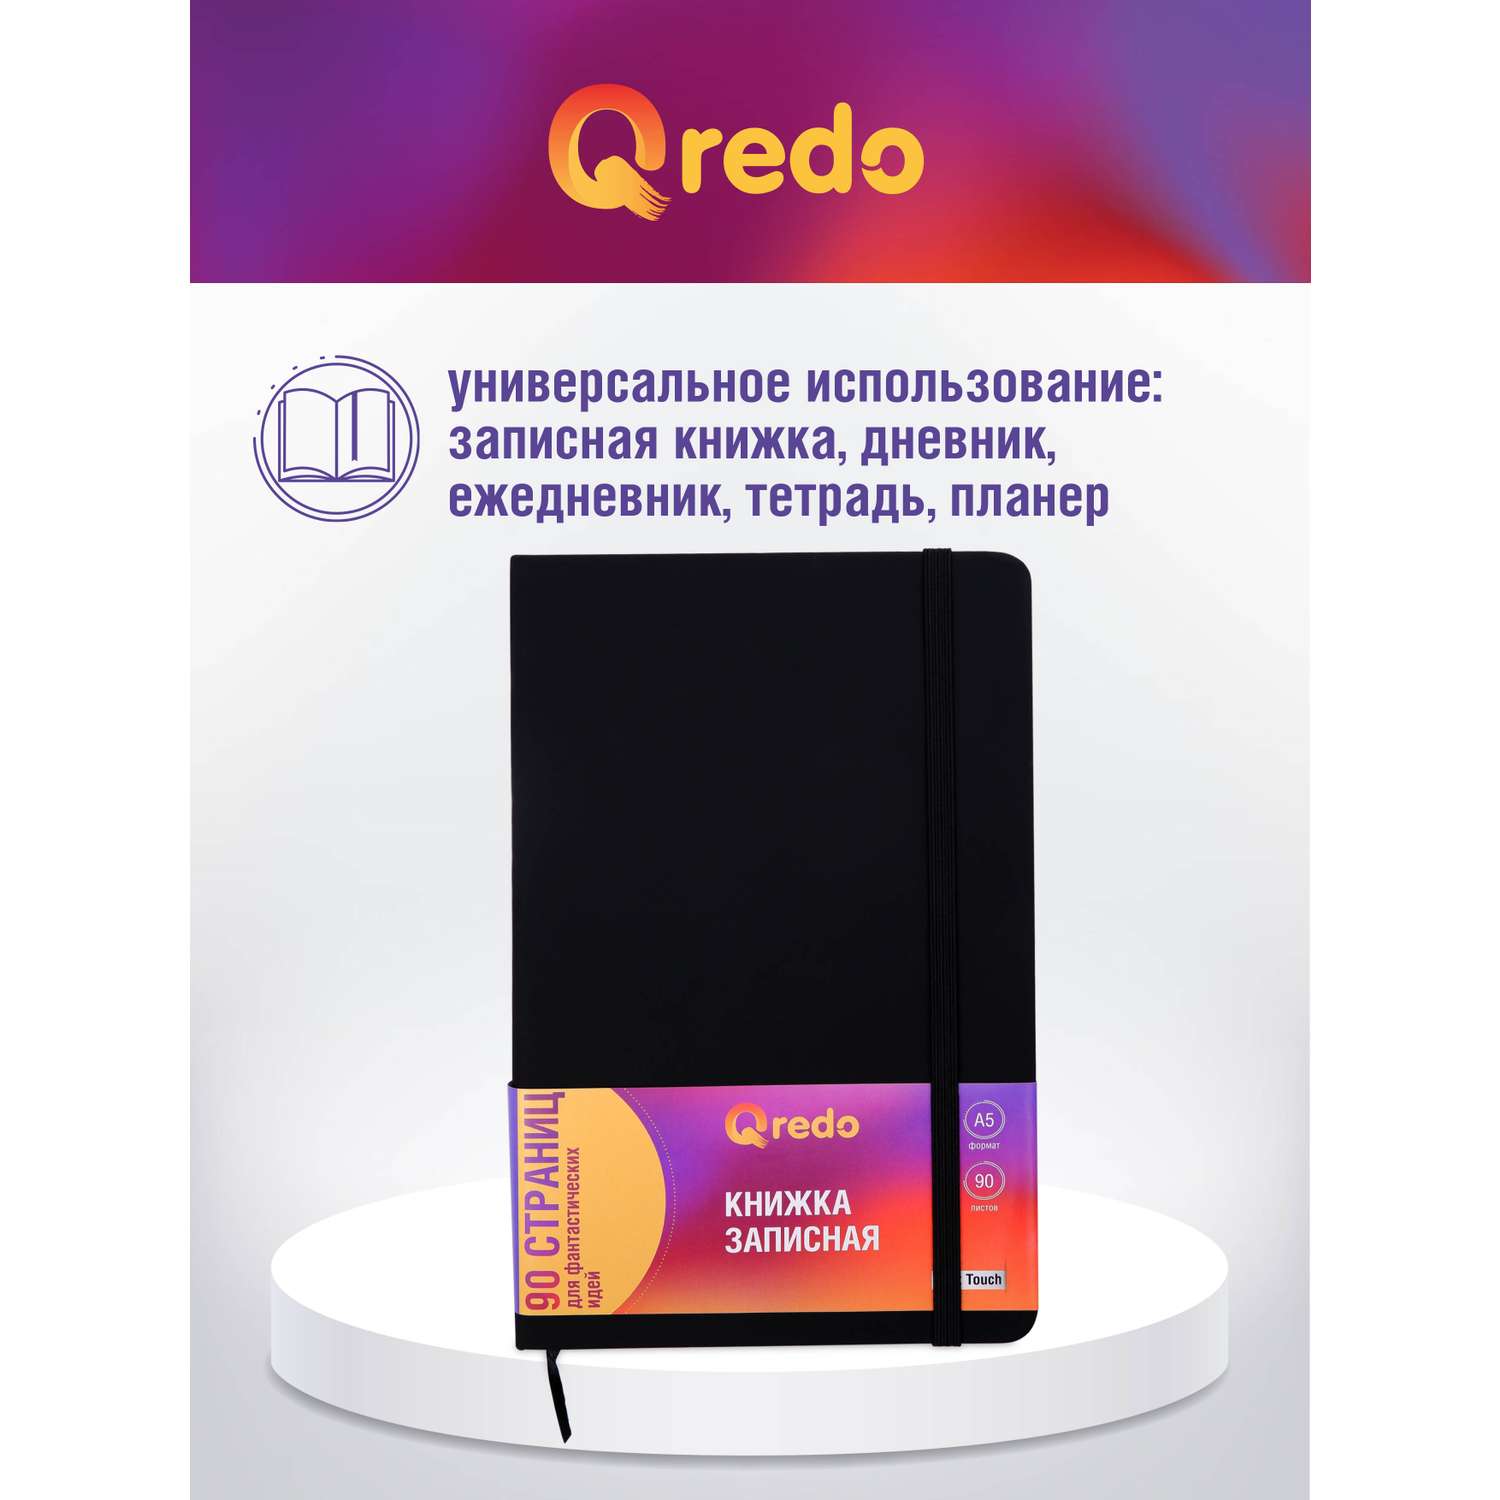 Записная книжка Qredo в клетку А5 90л Qredo черная обложка soft touch на резинке - фото 4